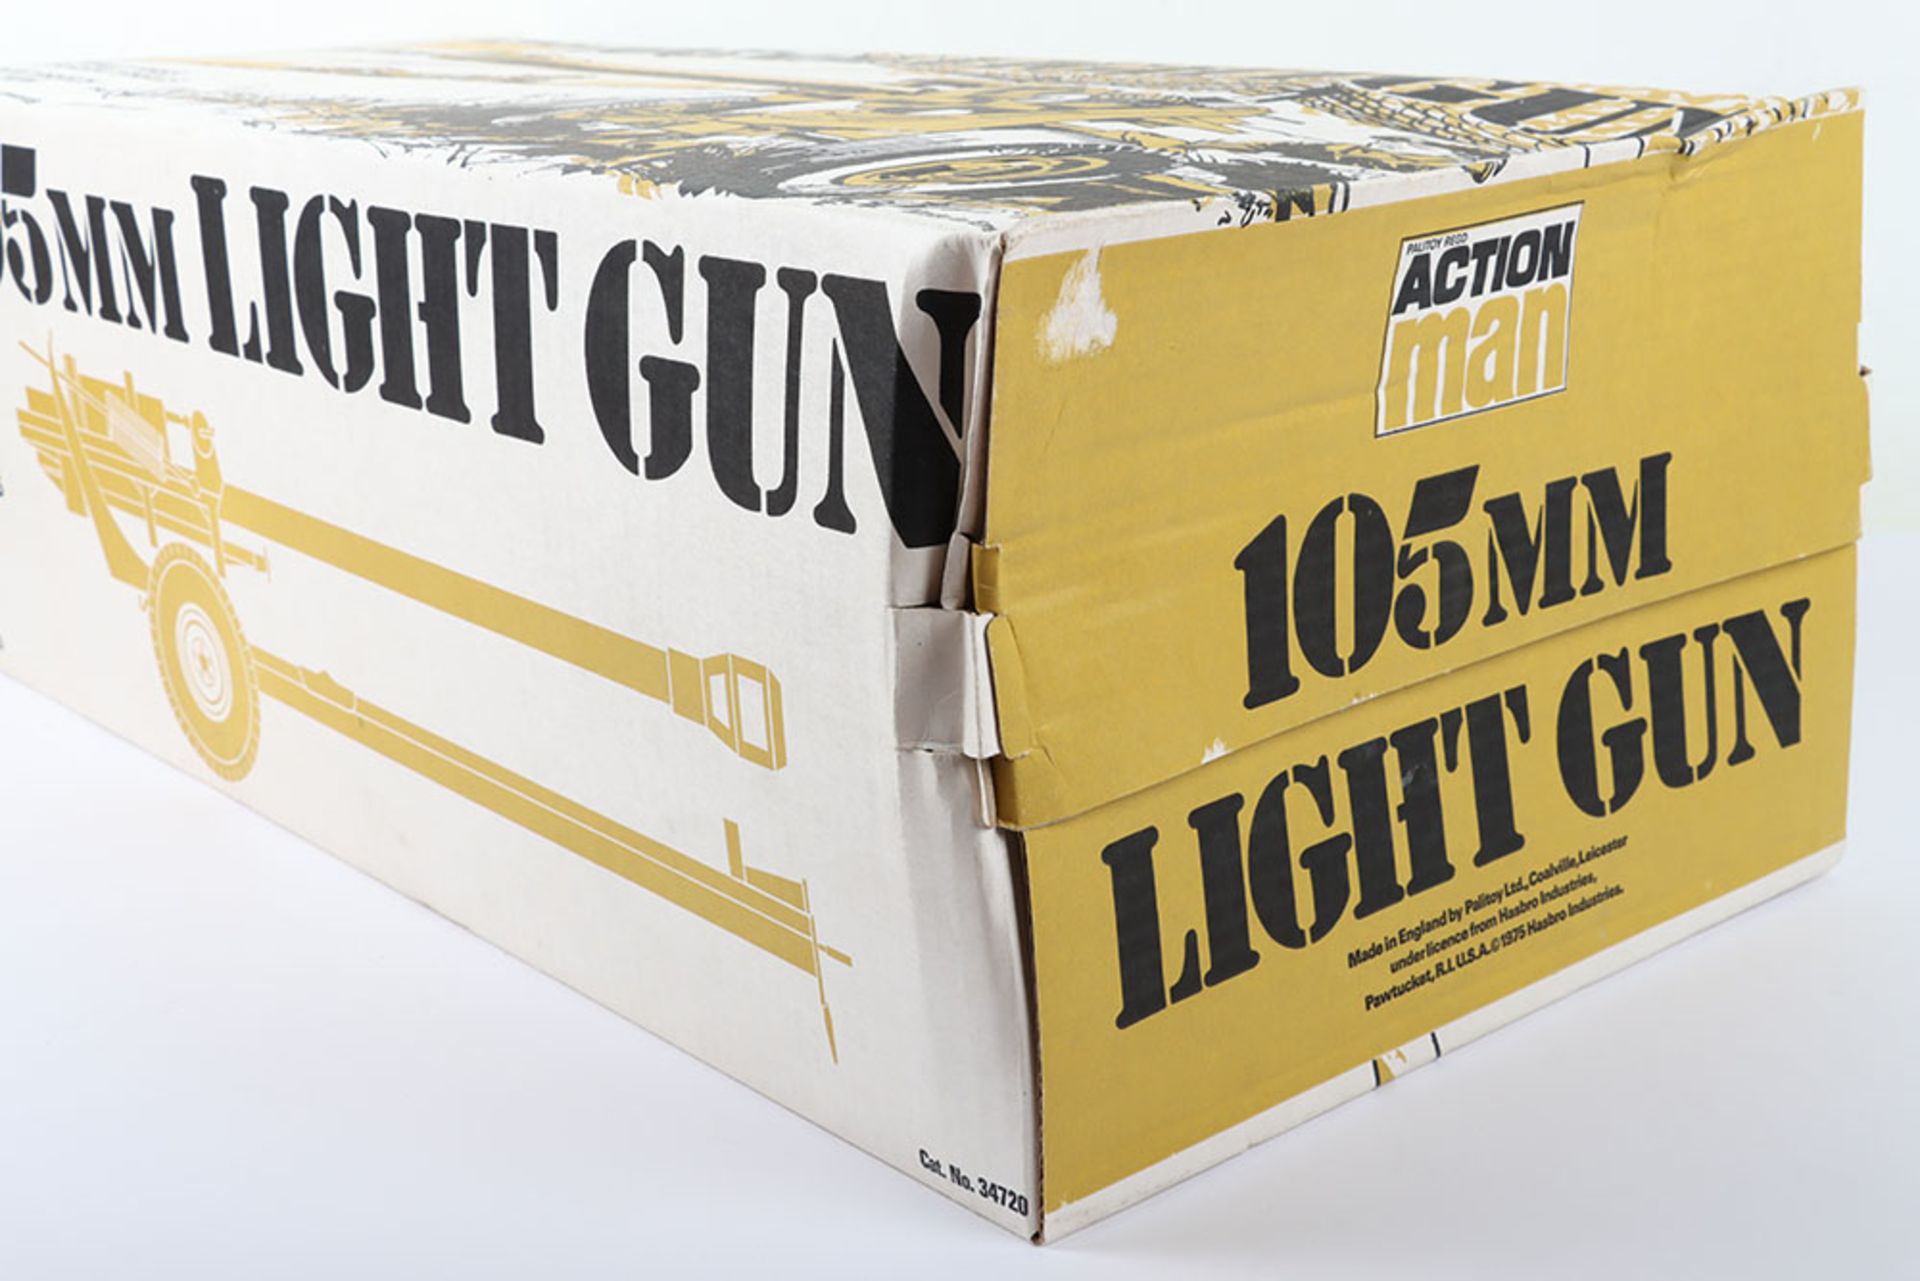 Palitoy Action Man 105mm Light Gun - Image 5 of 6